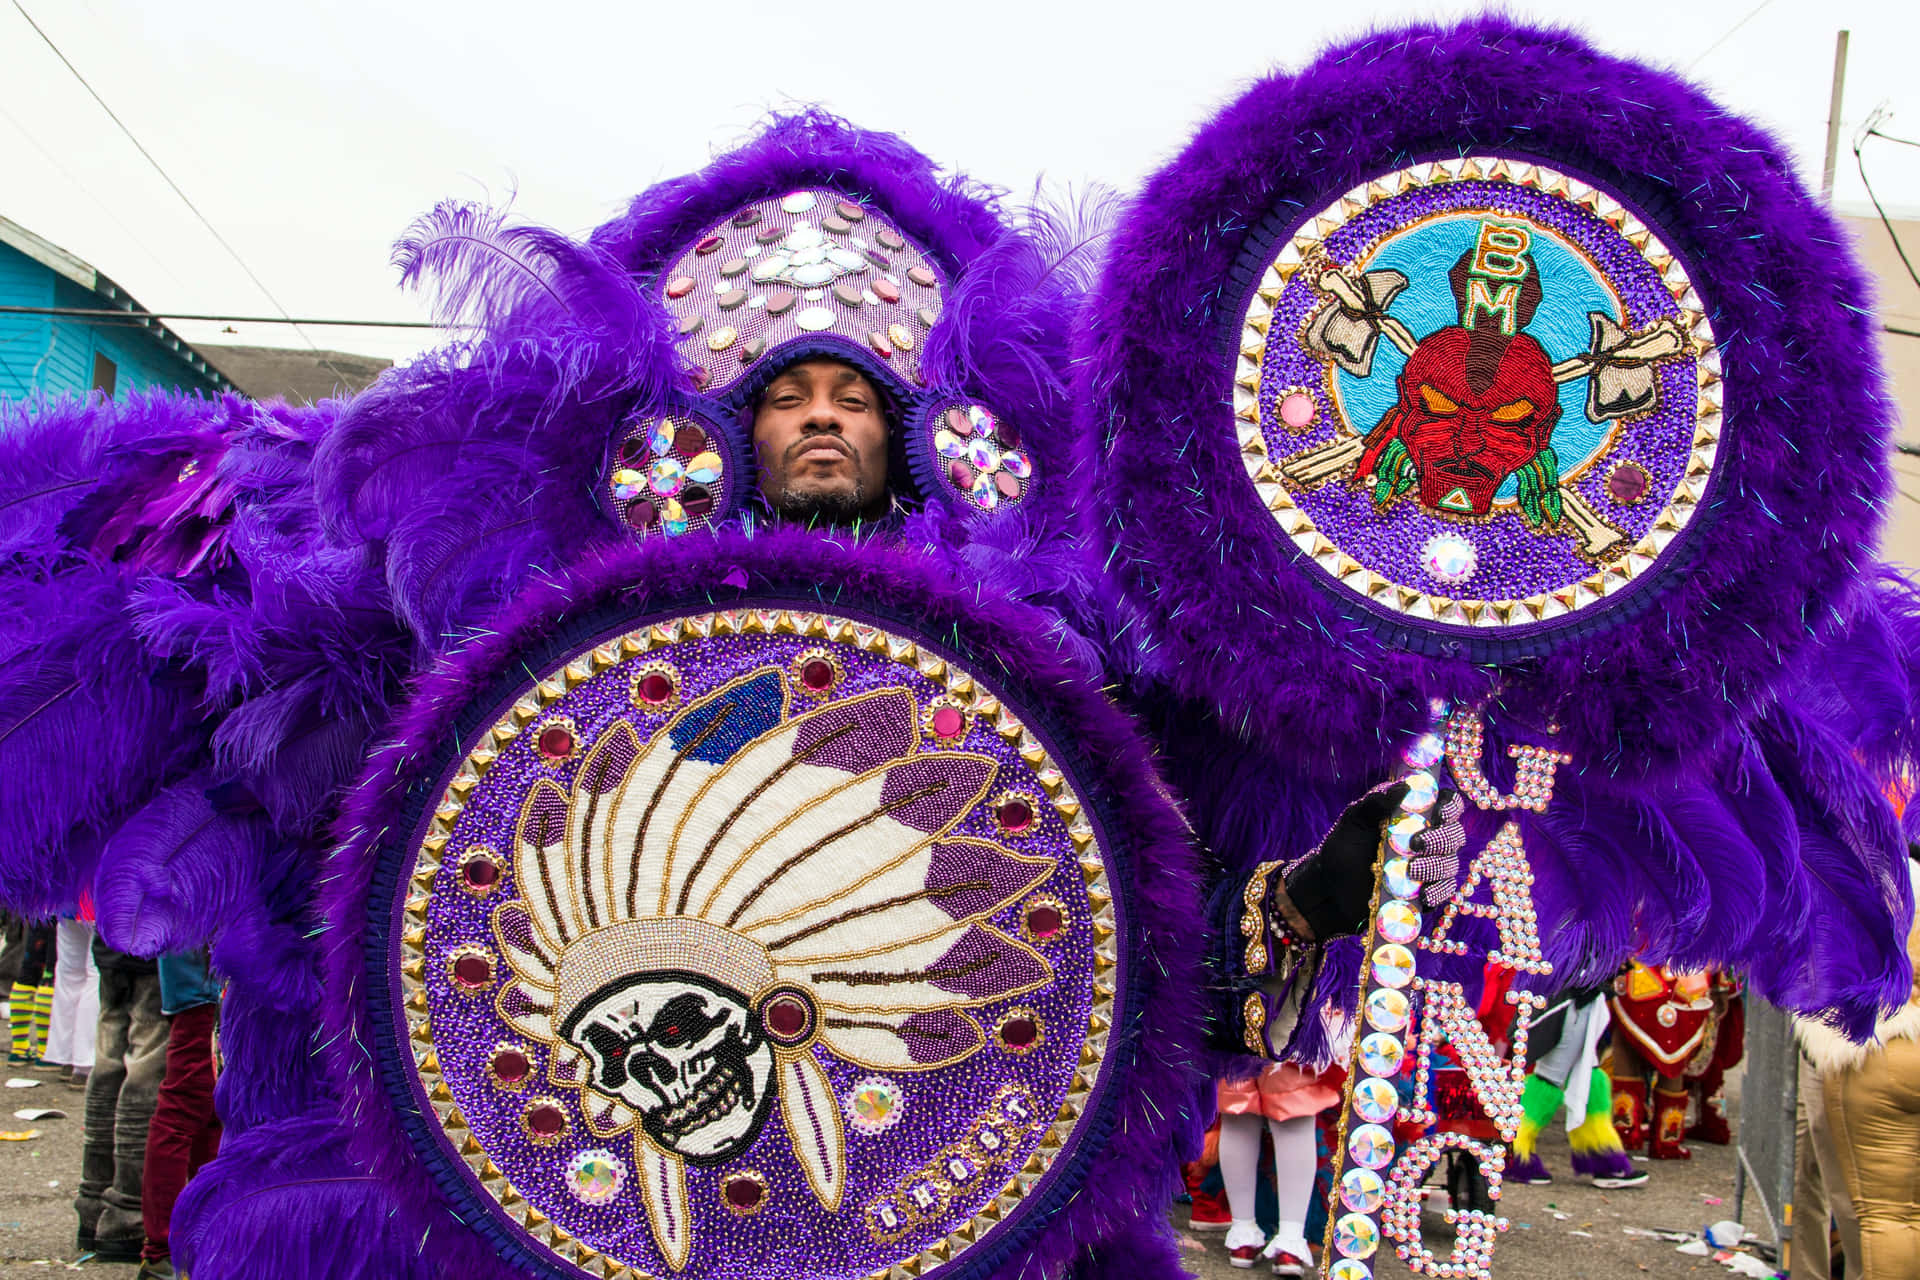 Revelers take part in the Mardi Gras celebration in New Orleans